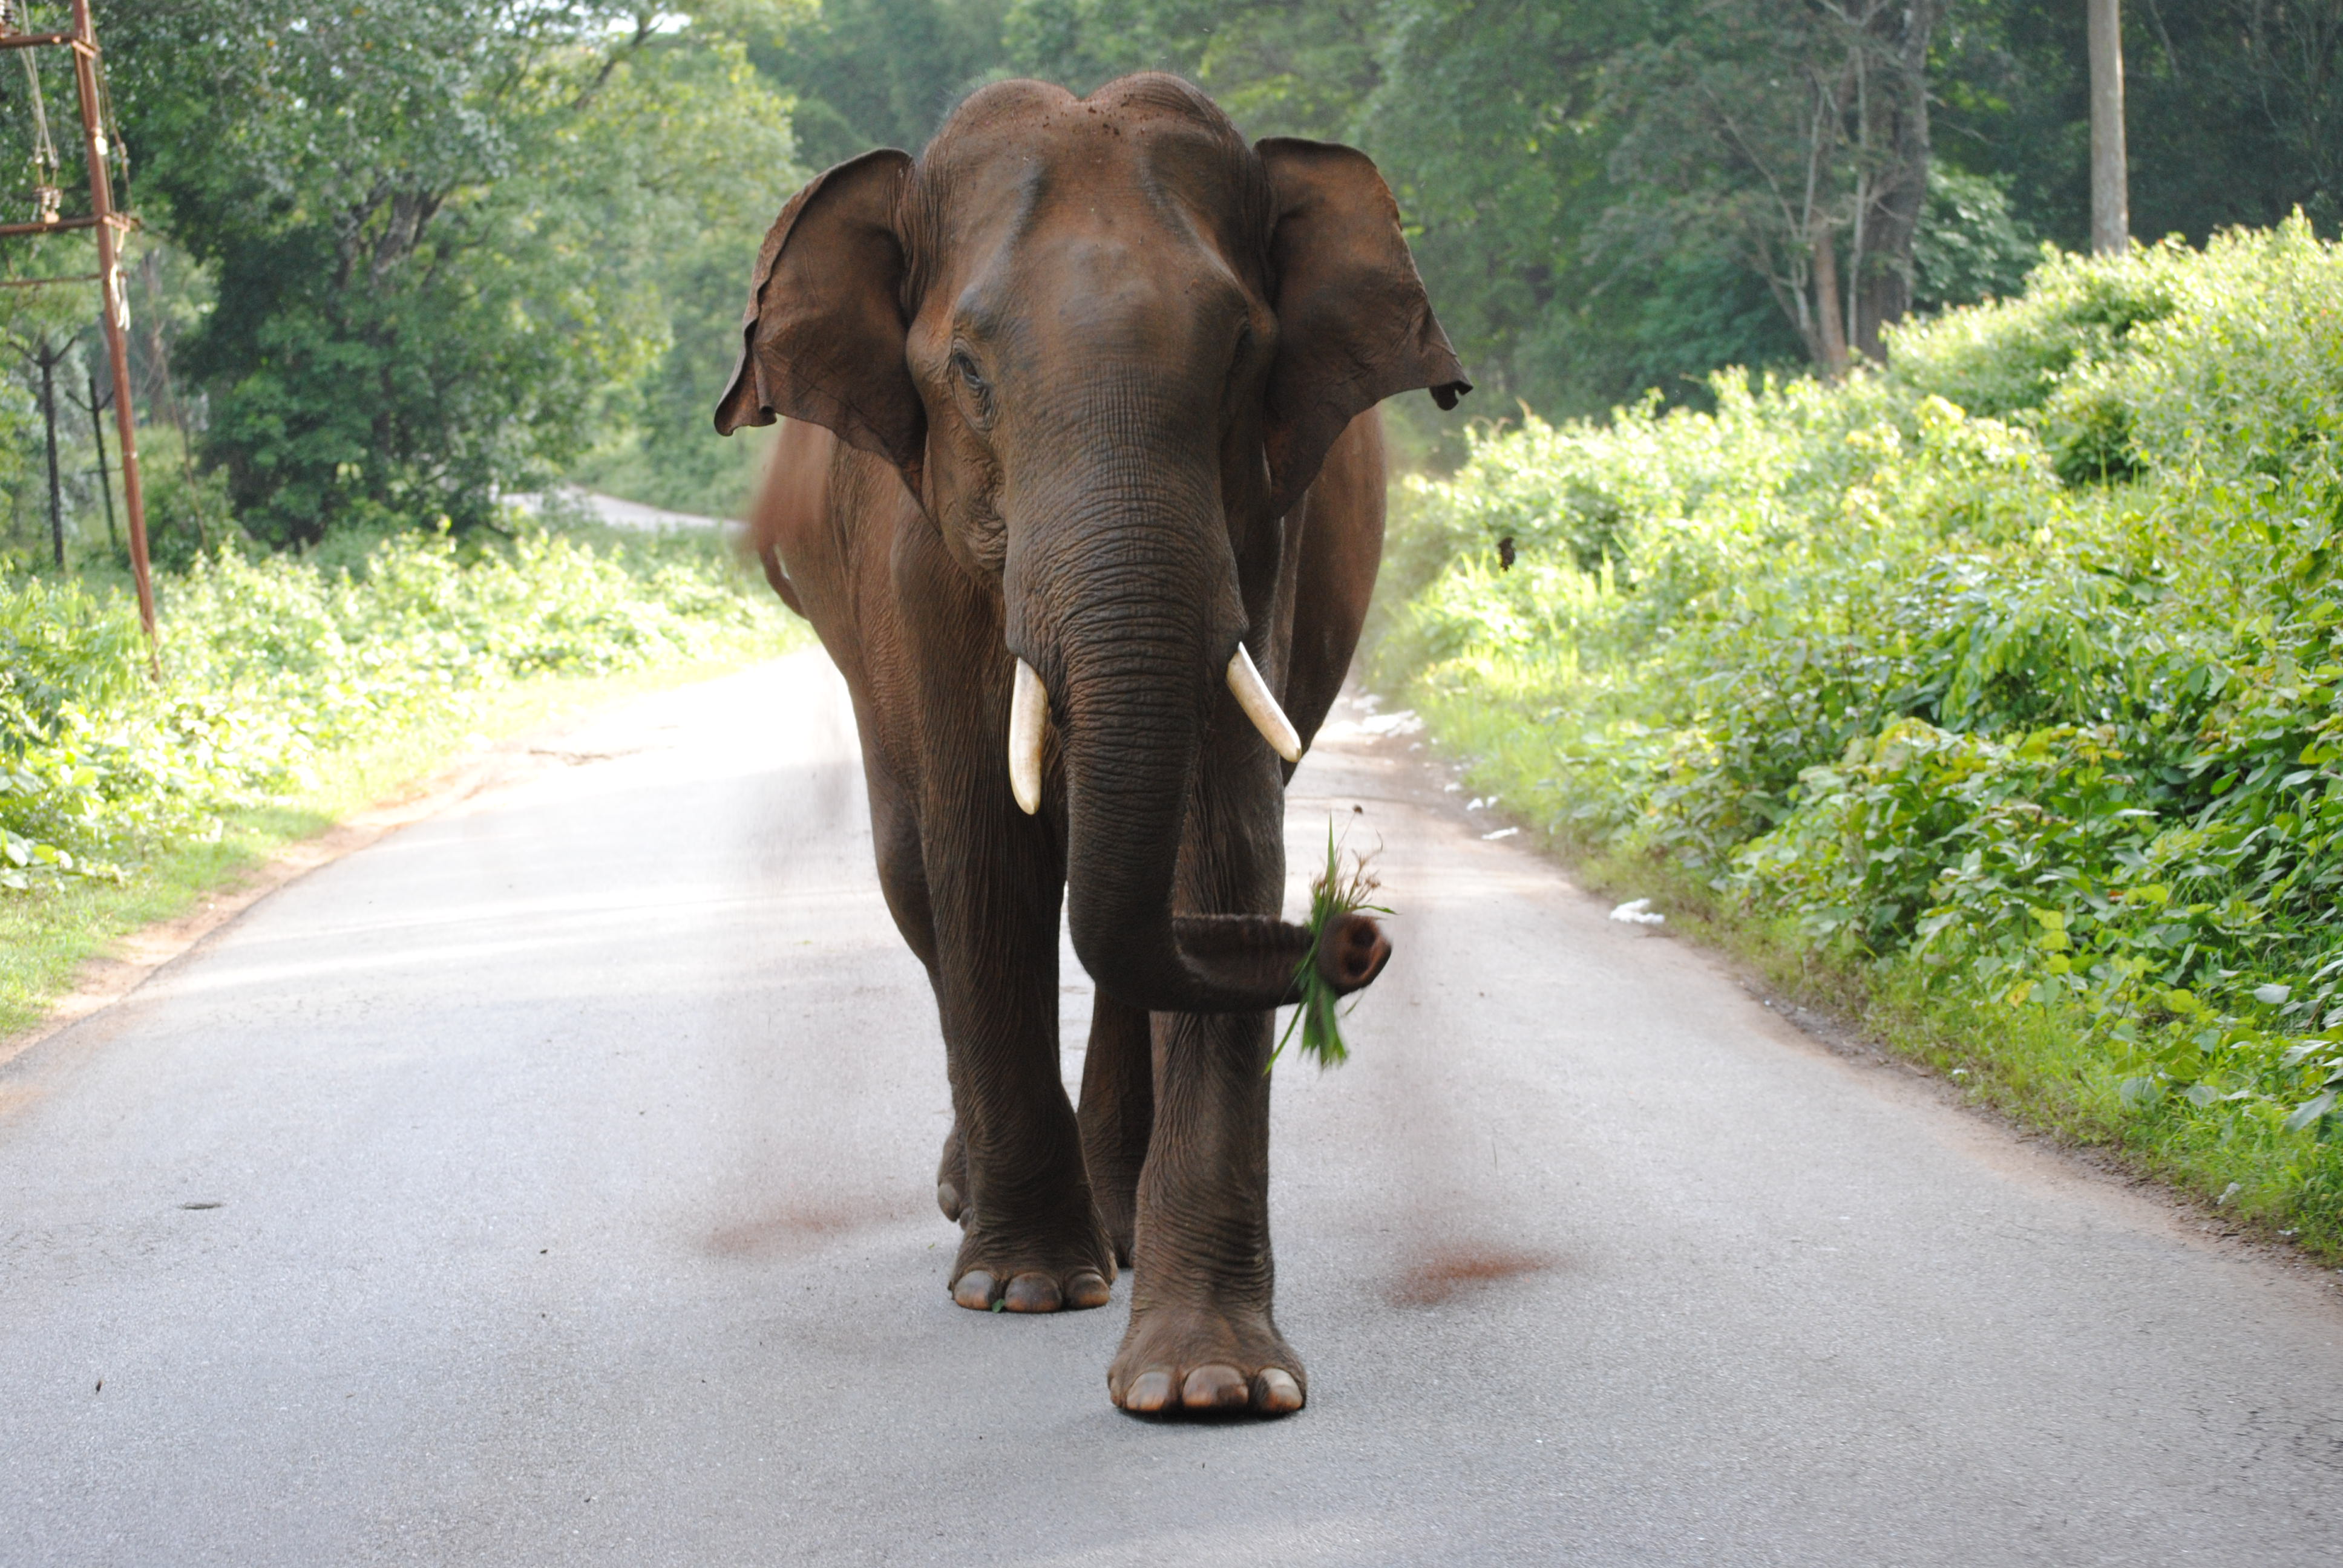 Beautiful giant elephant on the road photo